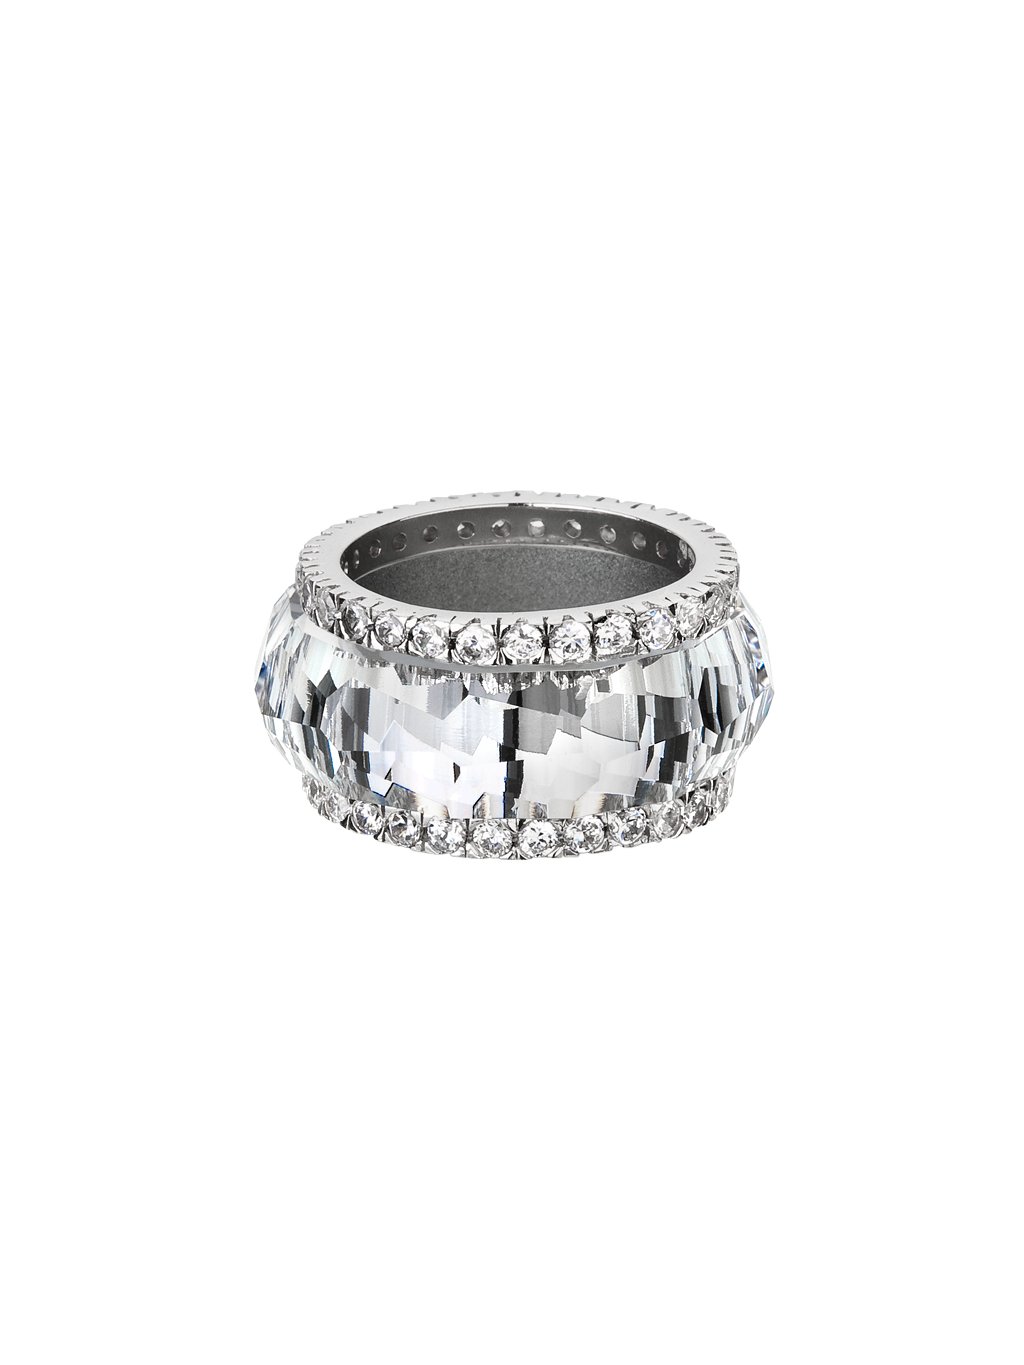 Stříbrný prsten De Luxe s českým křišťálem Preciosa, krystal